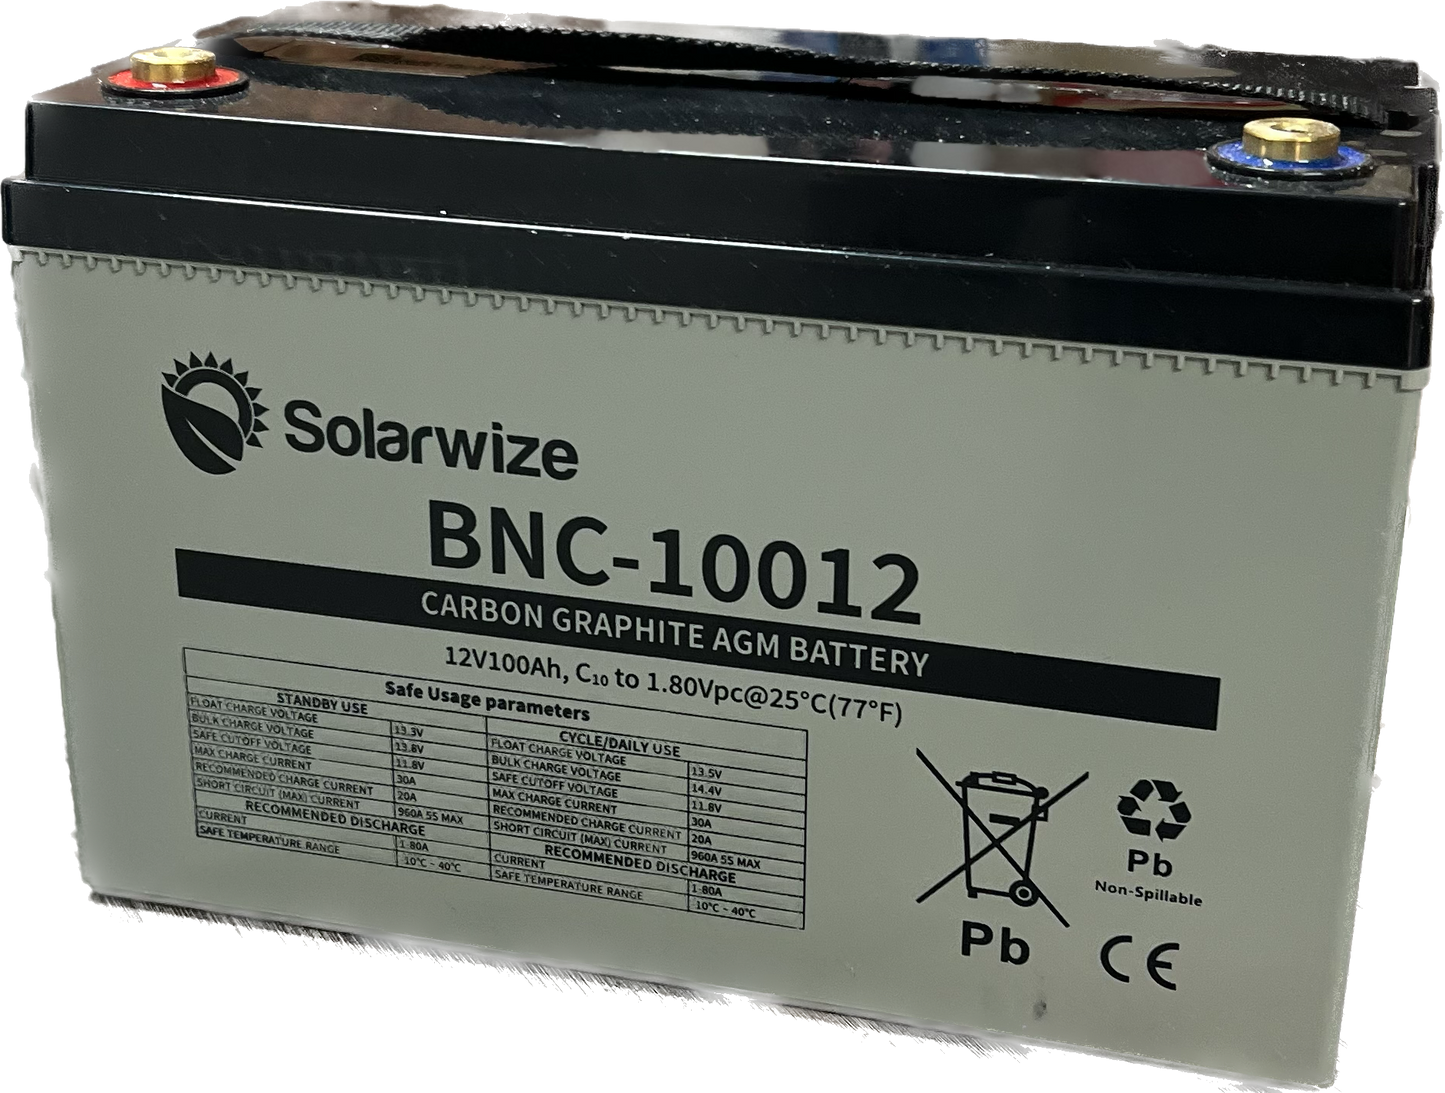 12V 100AH Solarwize AGM Carbon Graphite Battery (18 Month Warranty)